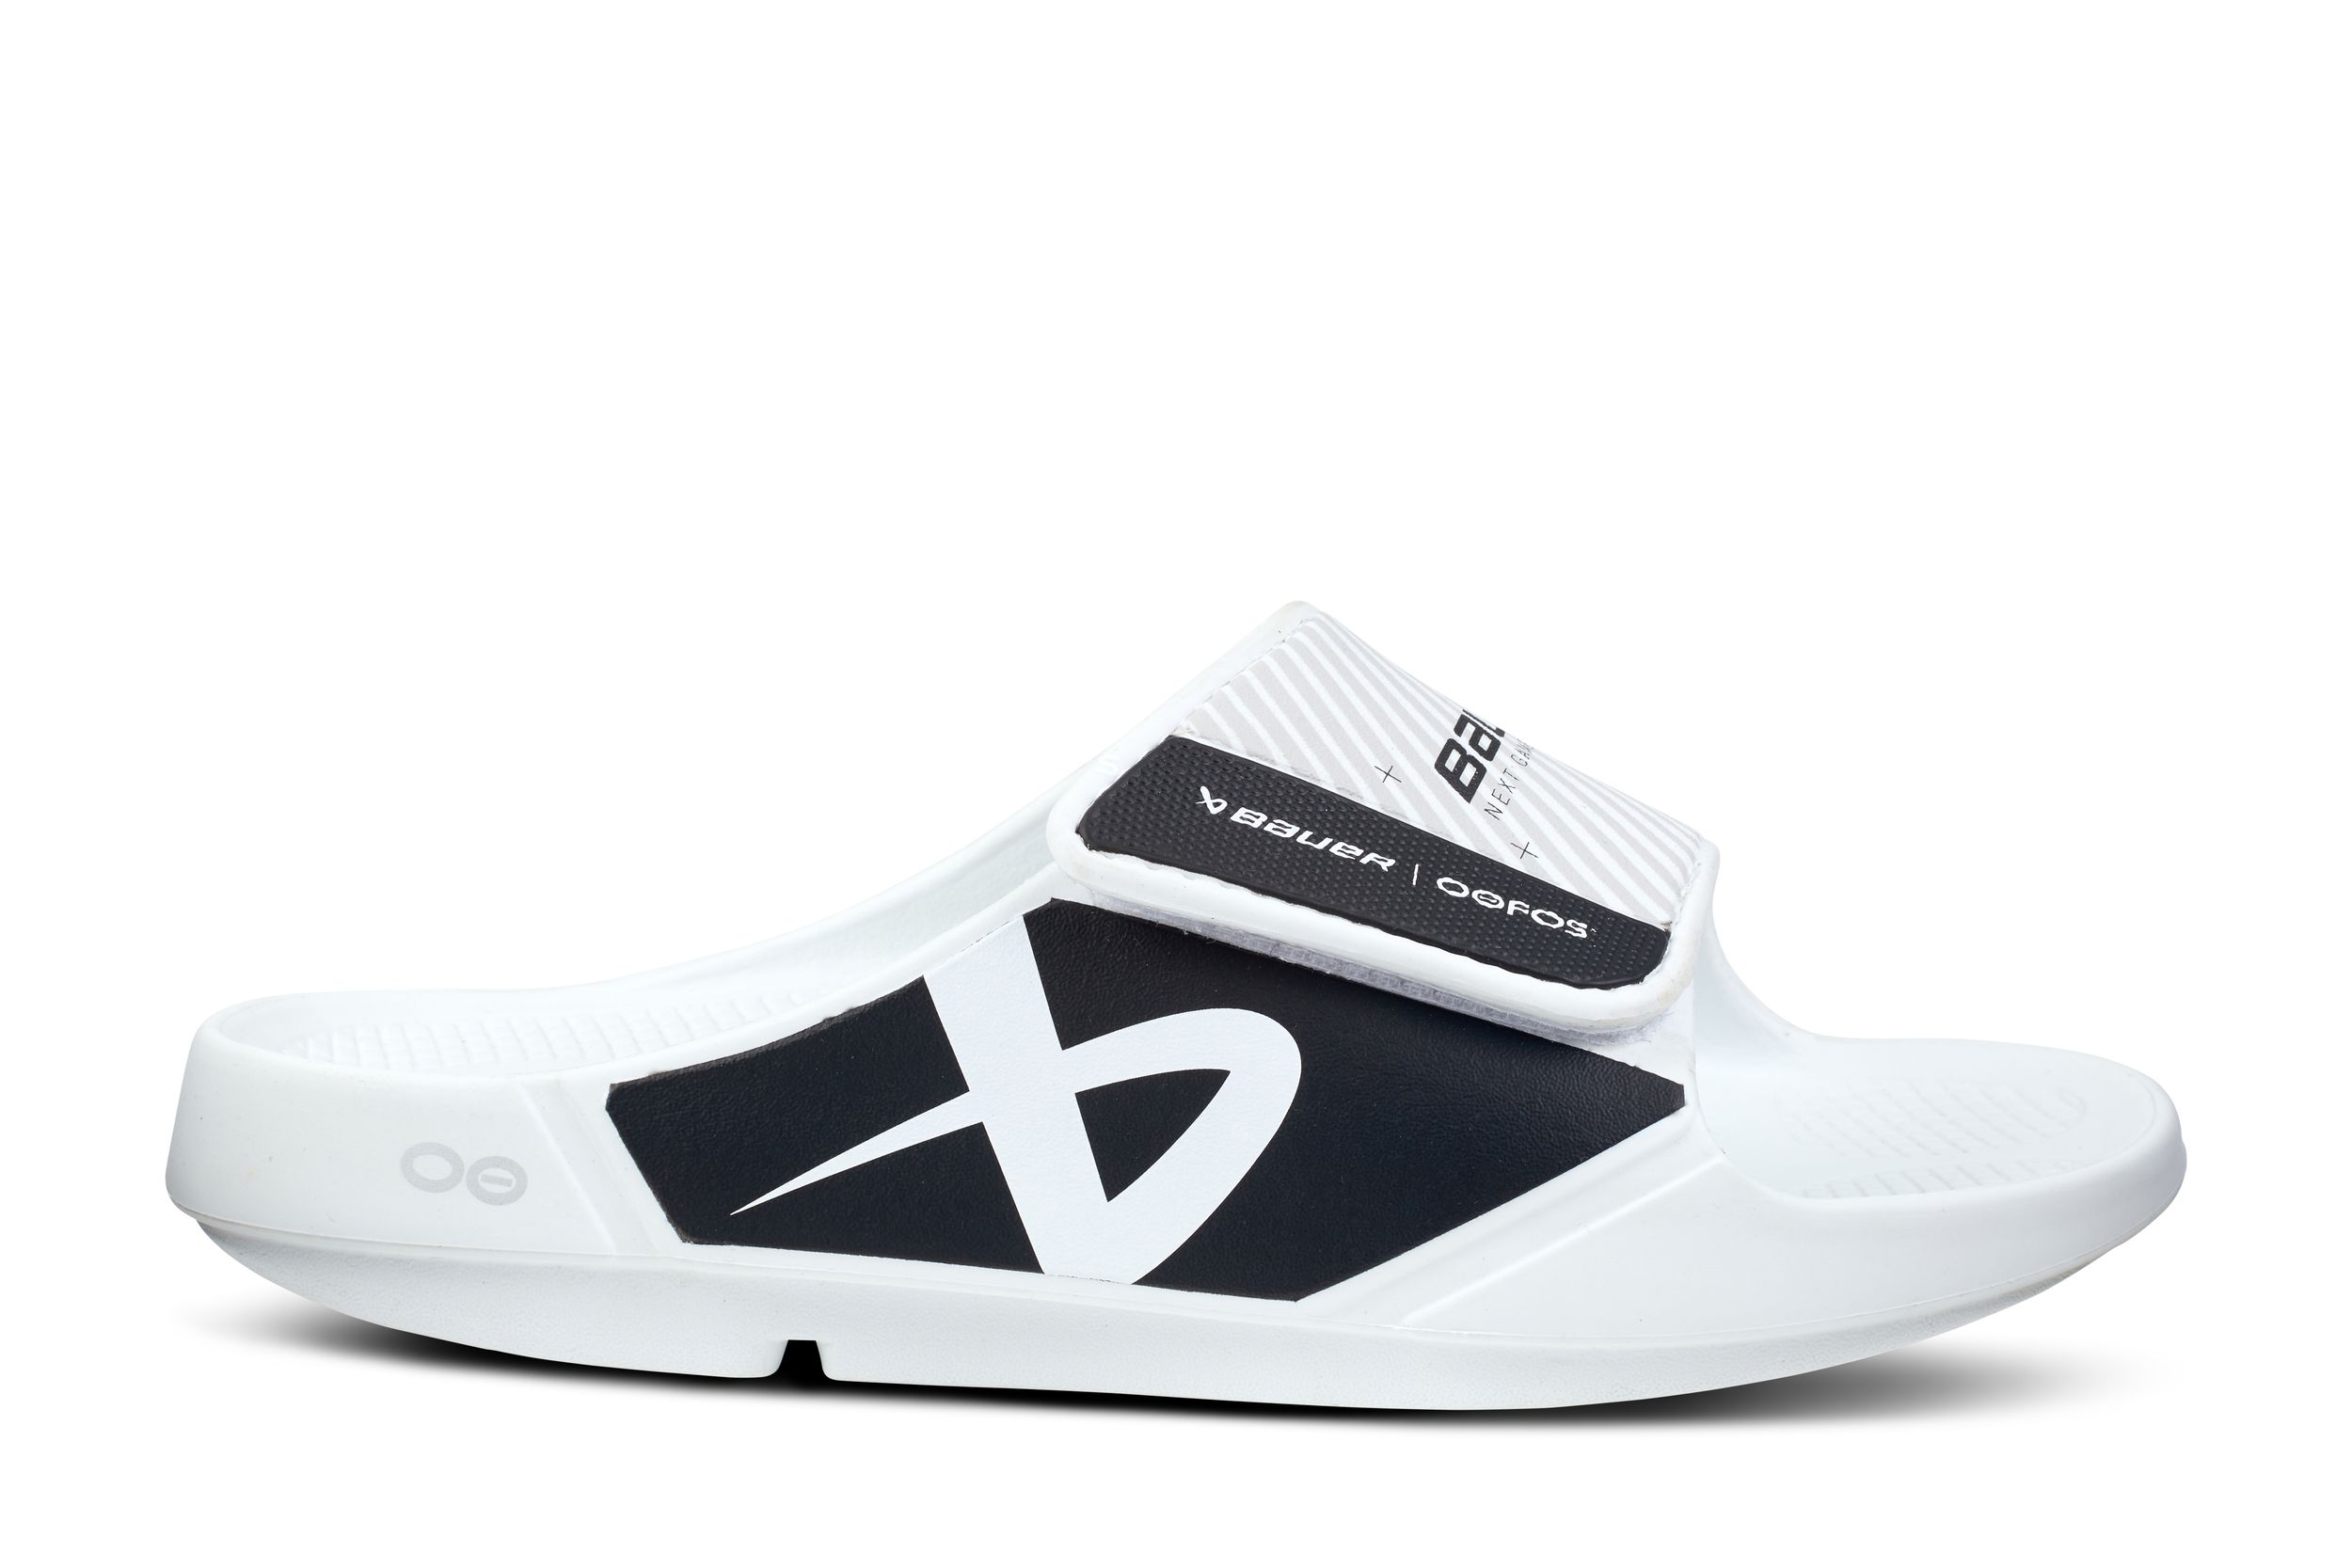 Bauer Men's Oofos NG Sport Flex Sandals